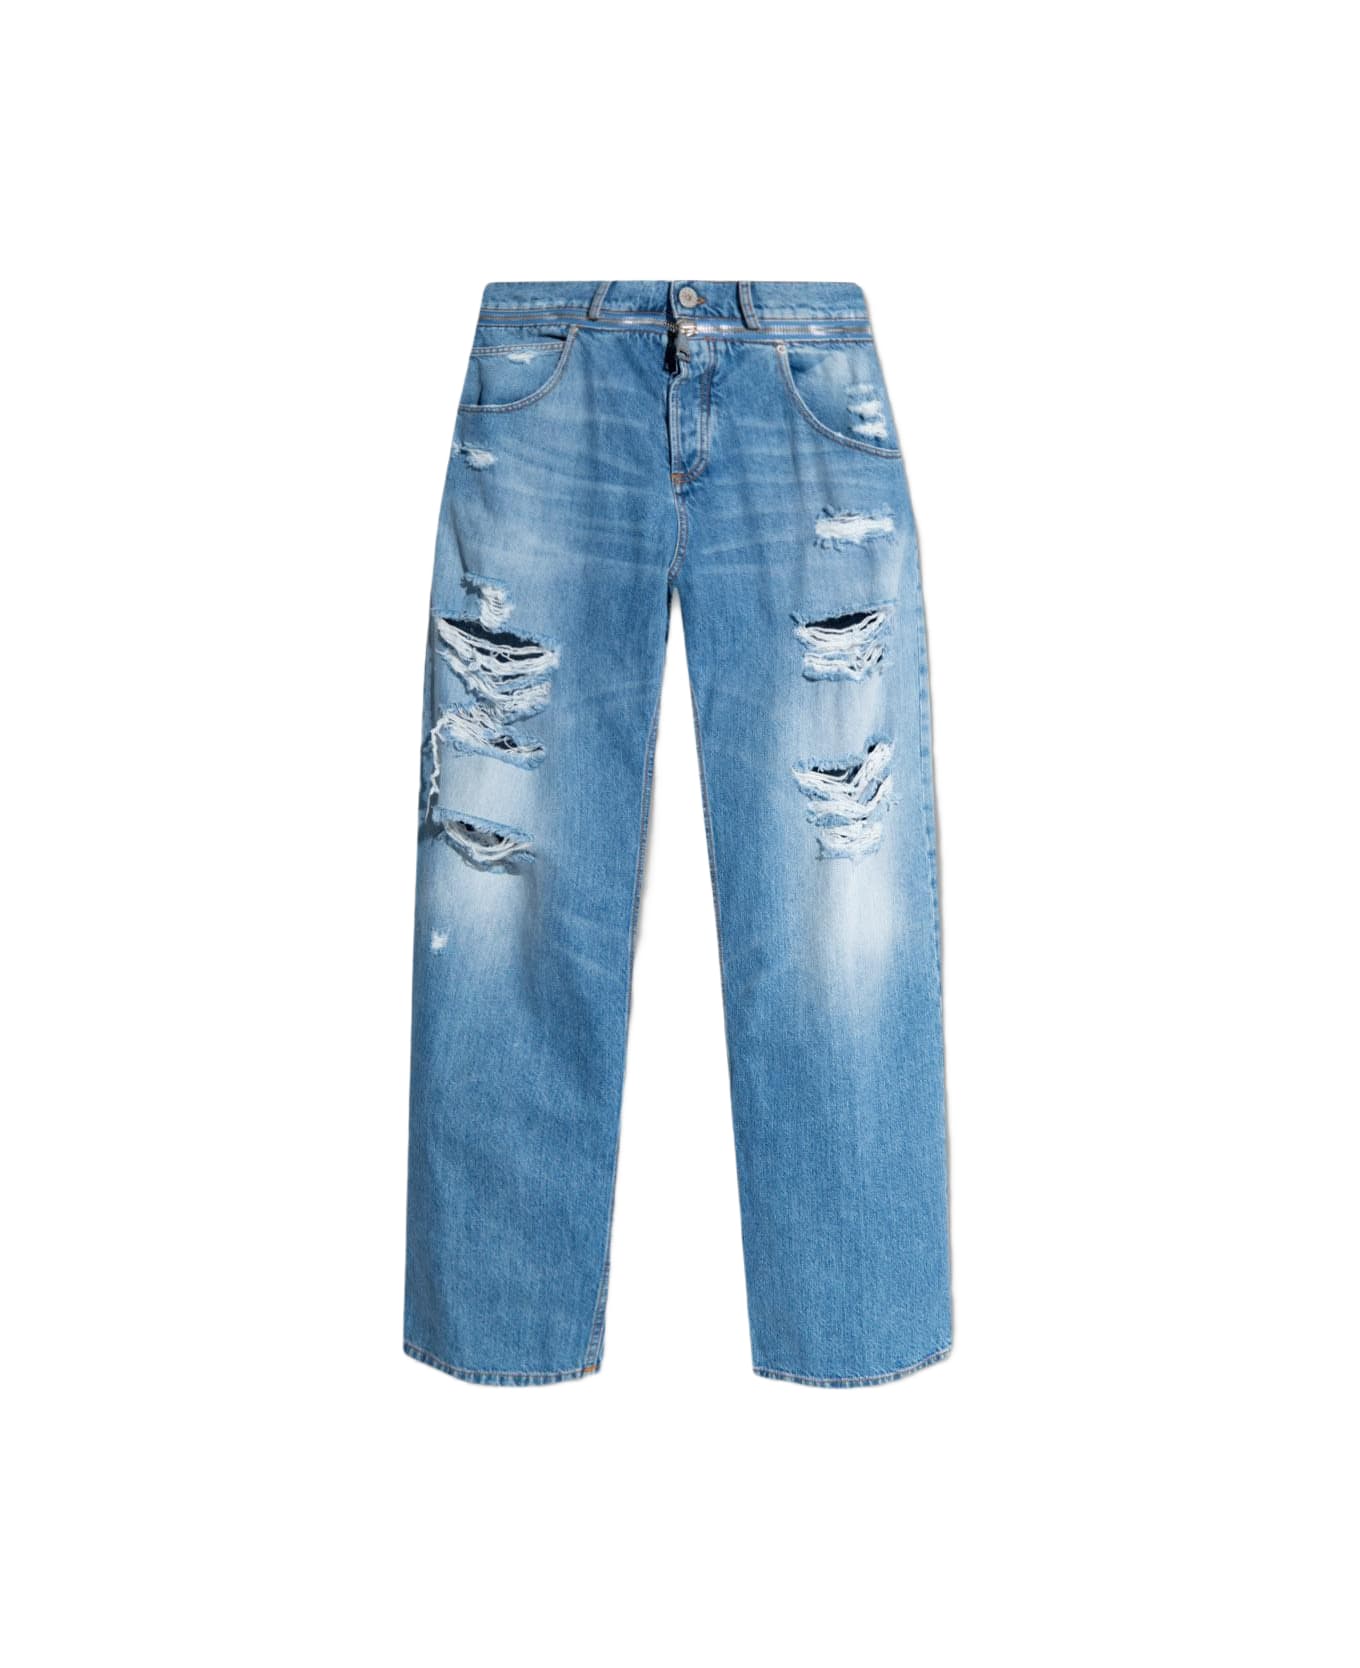 Balmain Jeans With Vintage Effect - Denim デニム